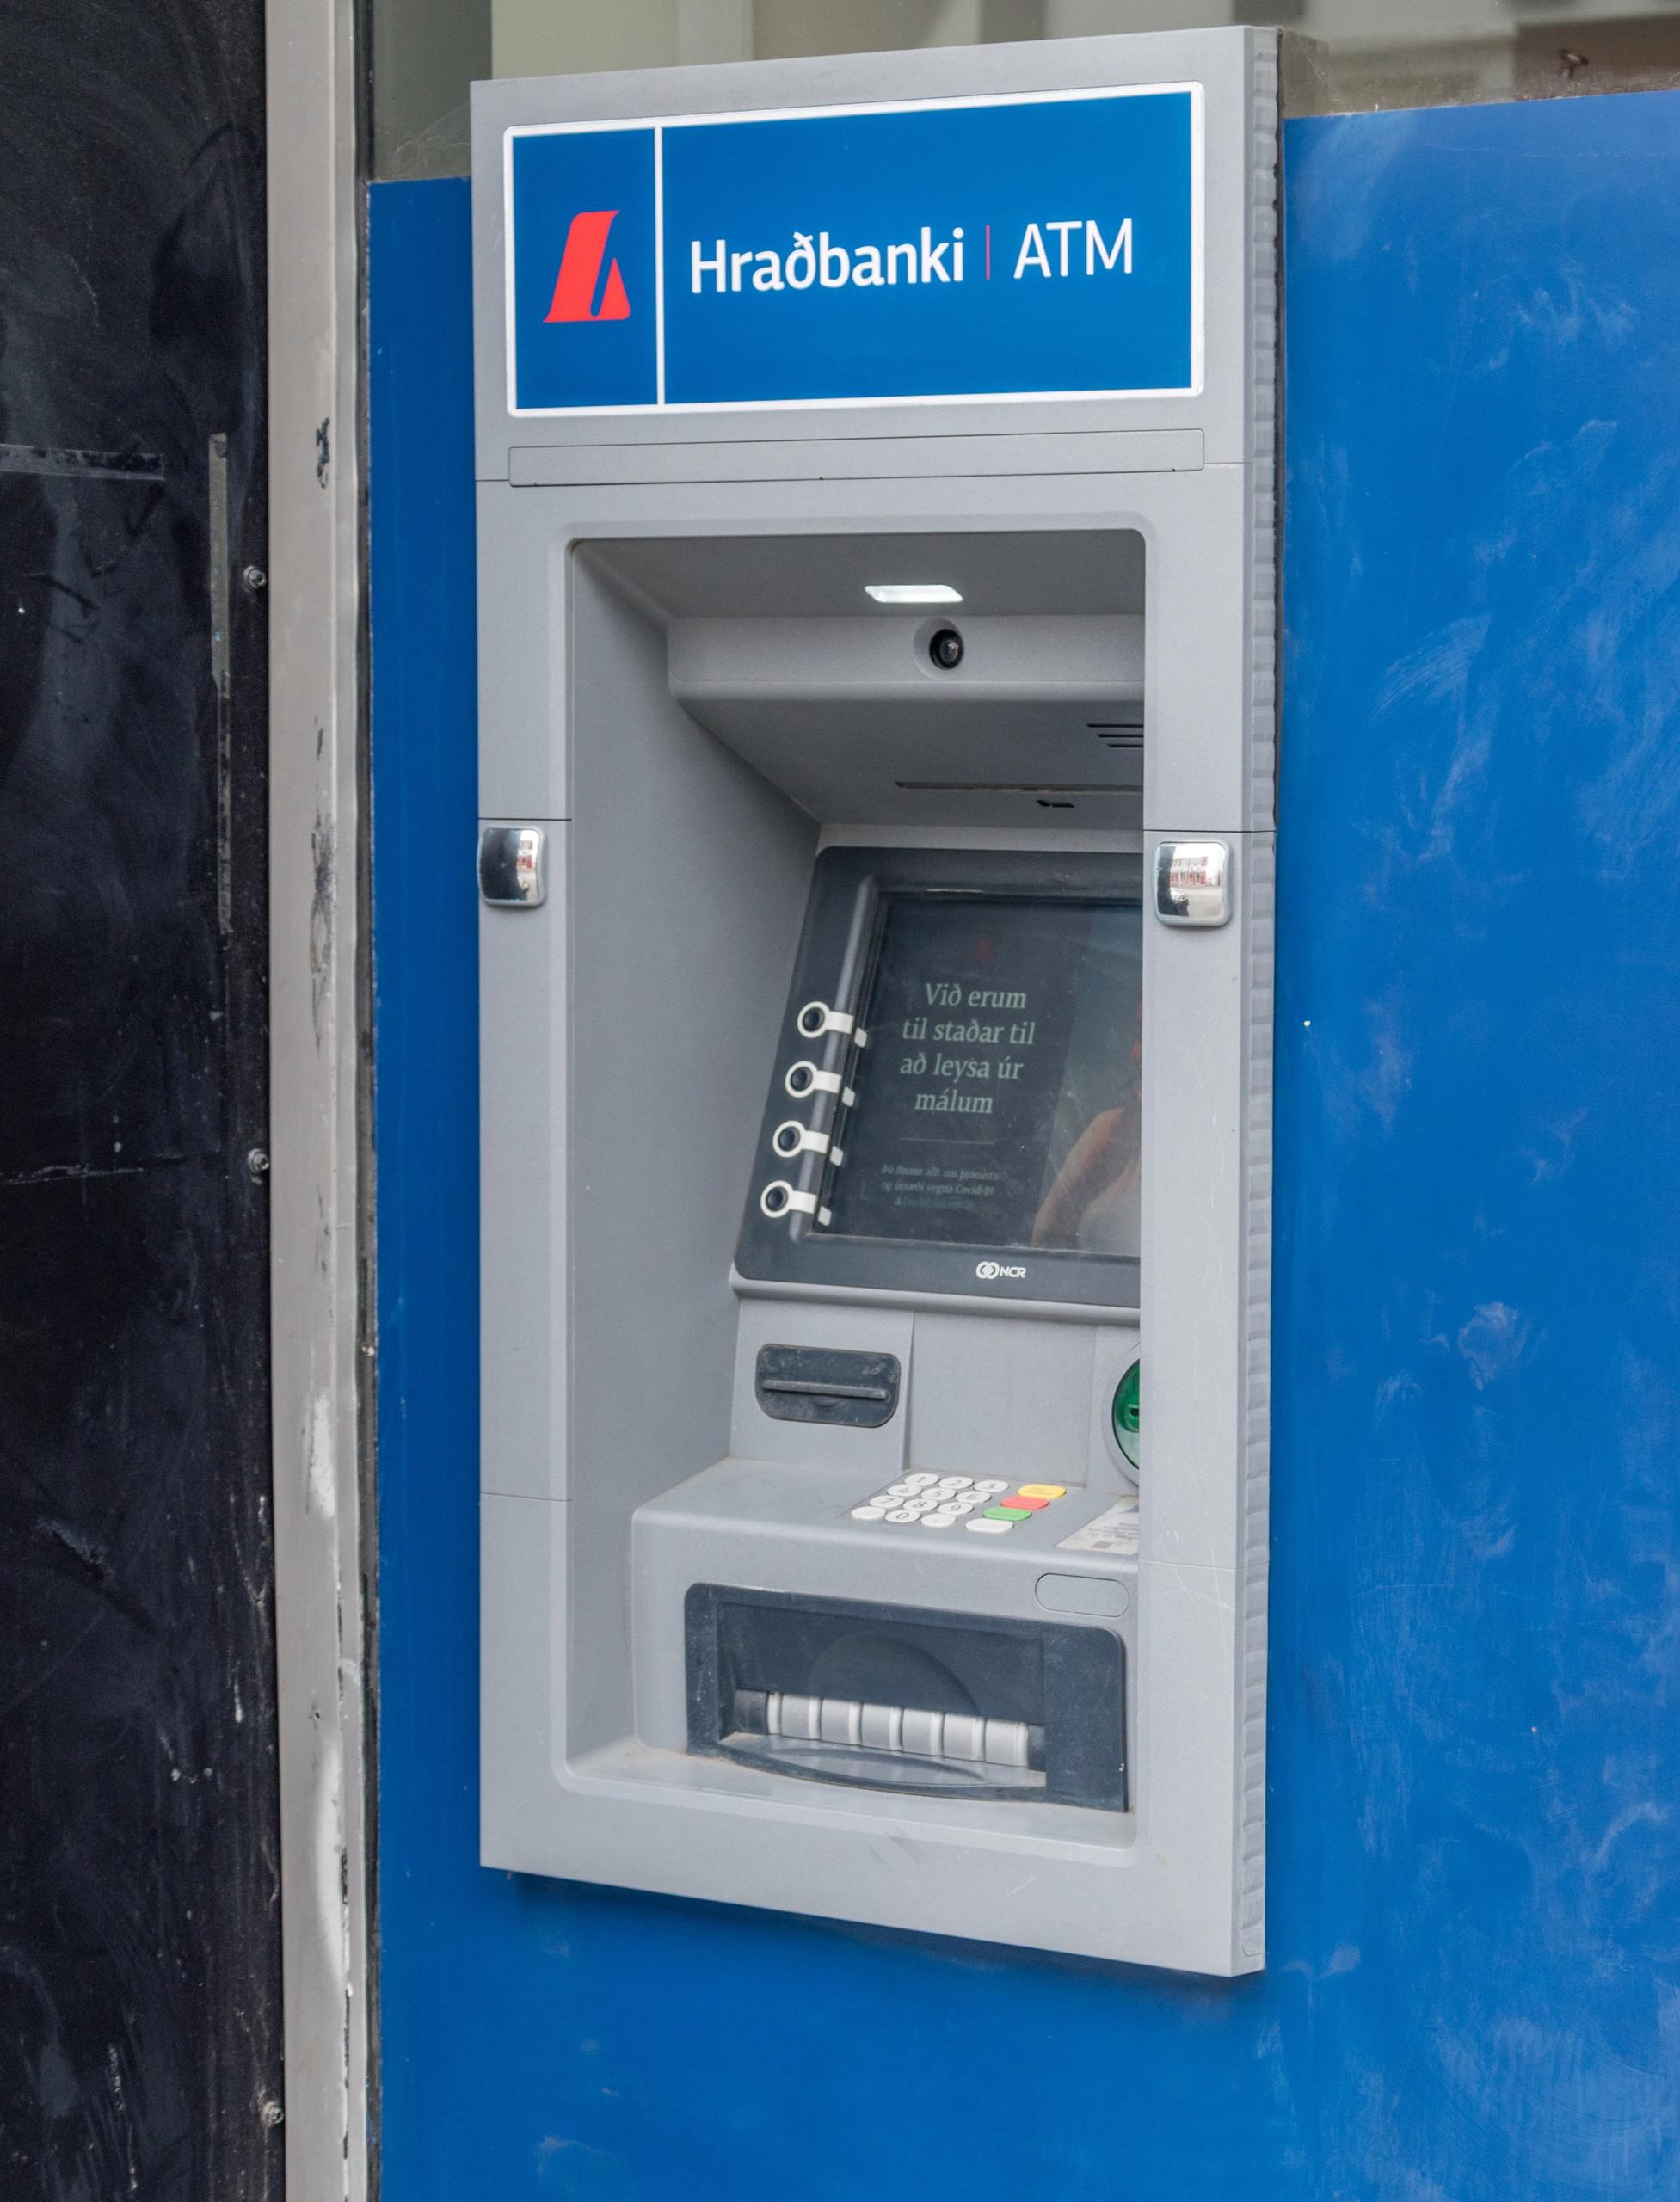 Reykjavik, Iceland - June 21, 2020: ATM of Hradbanki.